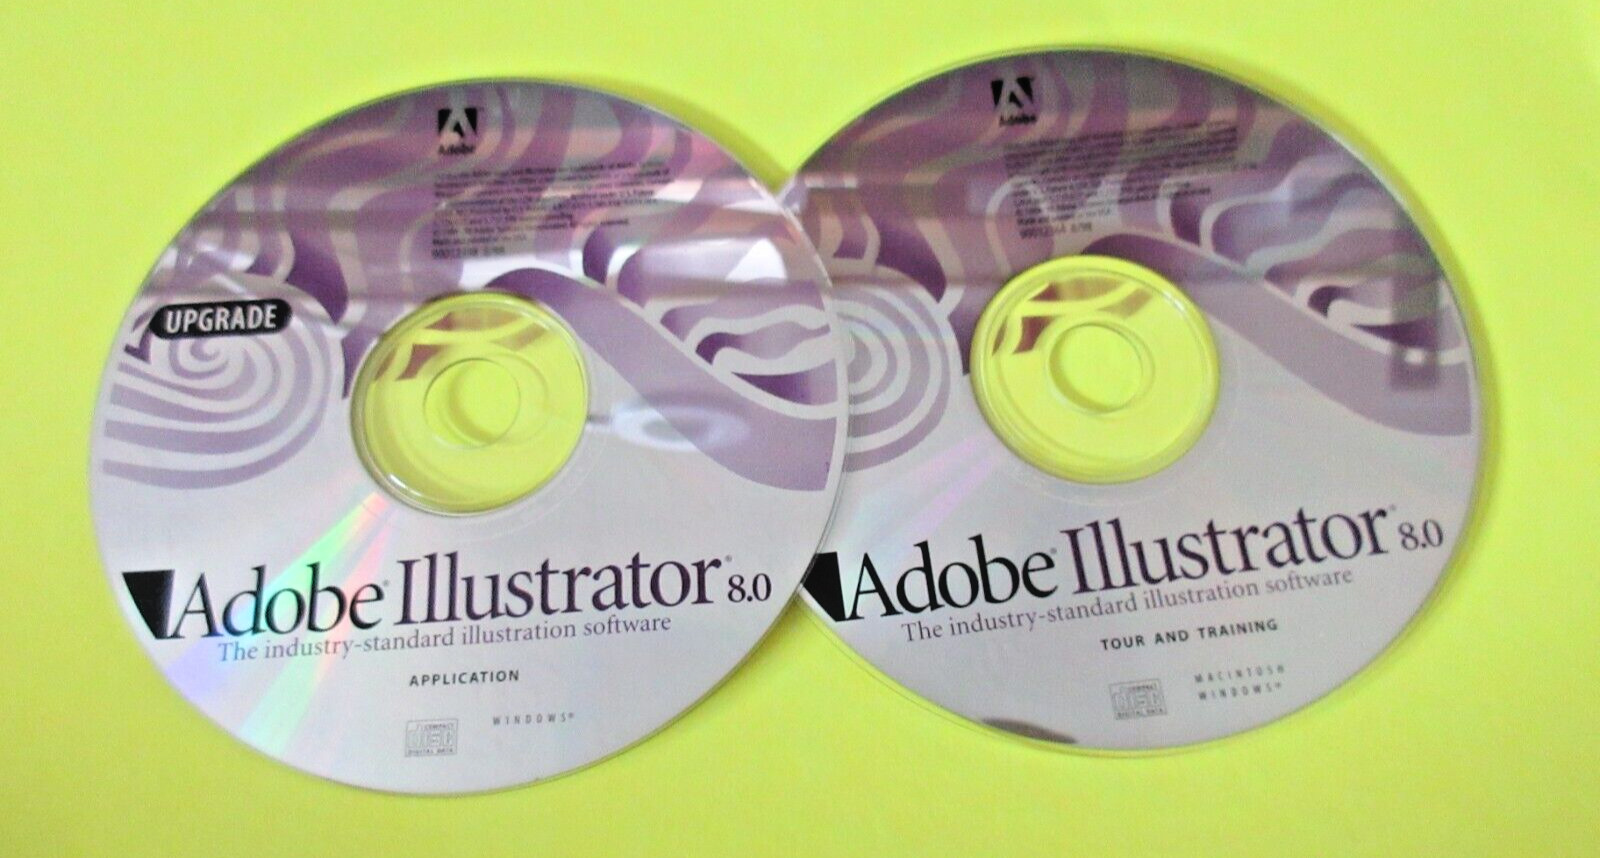 Adobe Illustrator 8.0 Upgrade for Windows